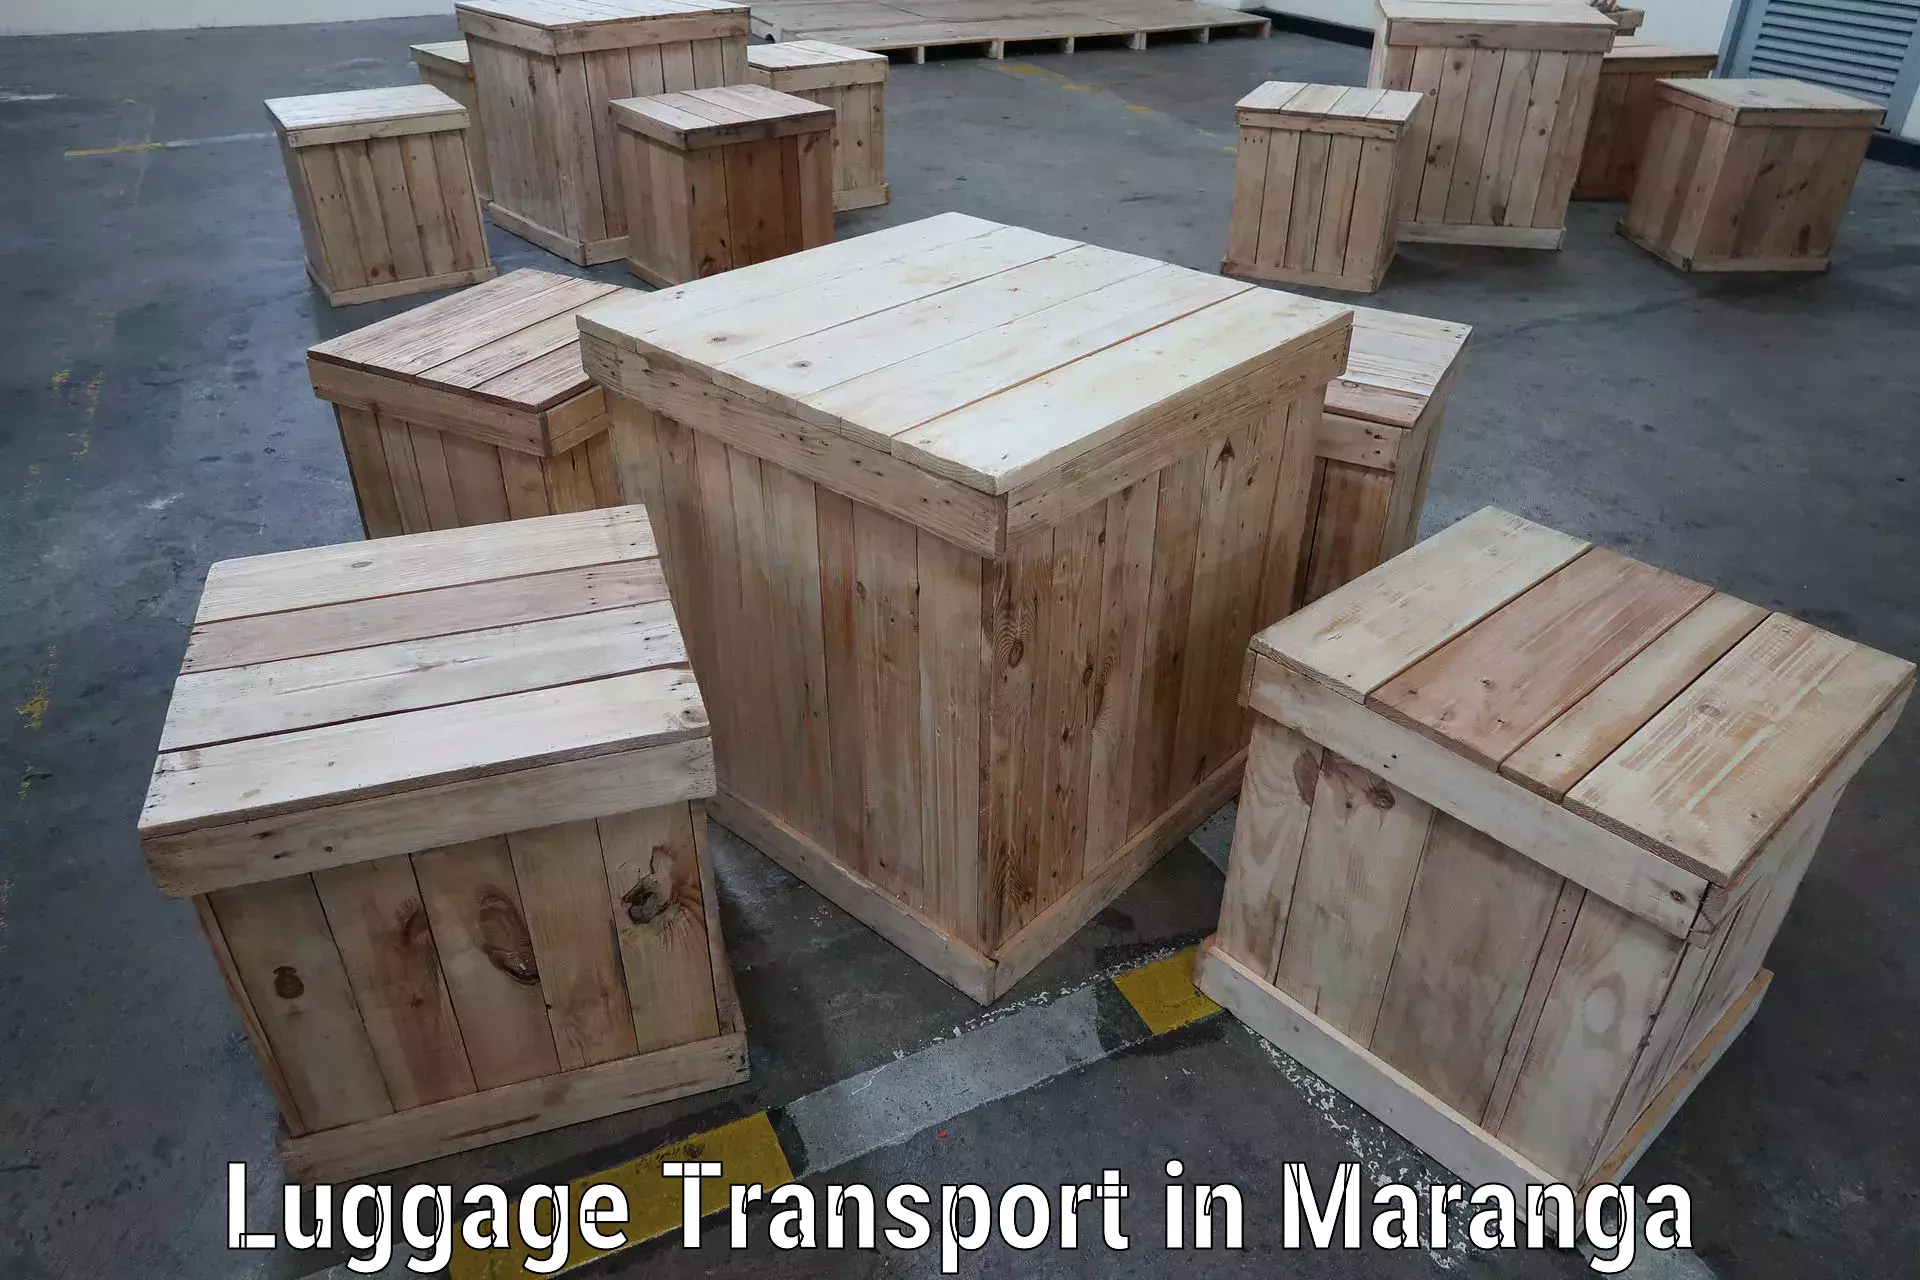 Luggage forwarding service in Maranga